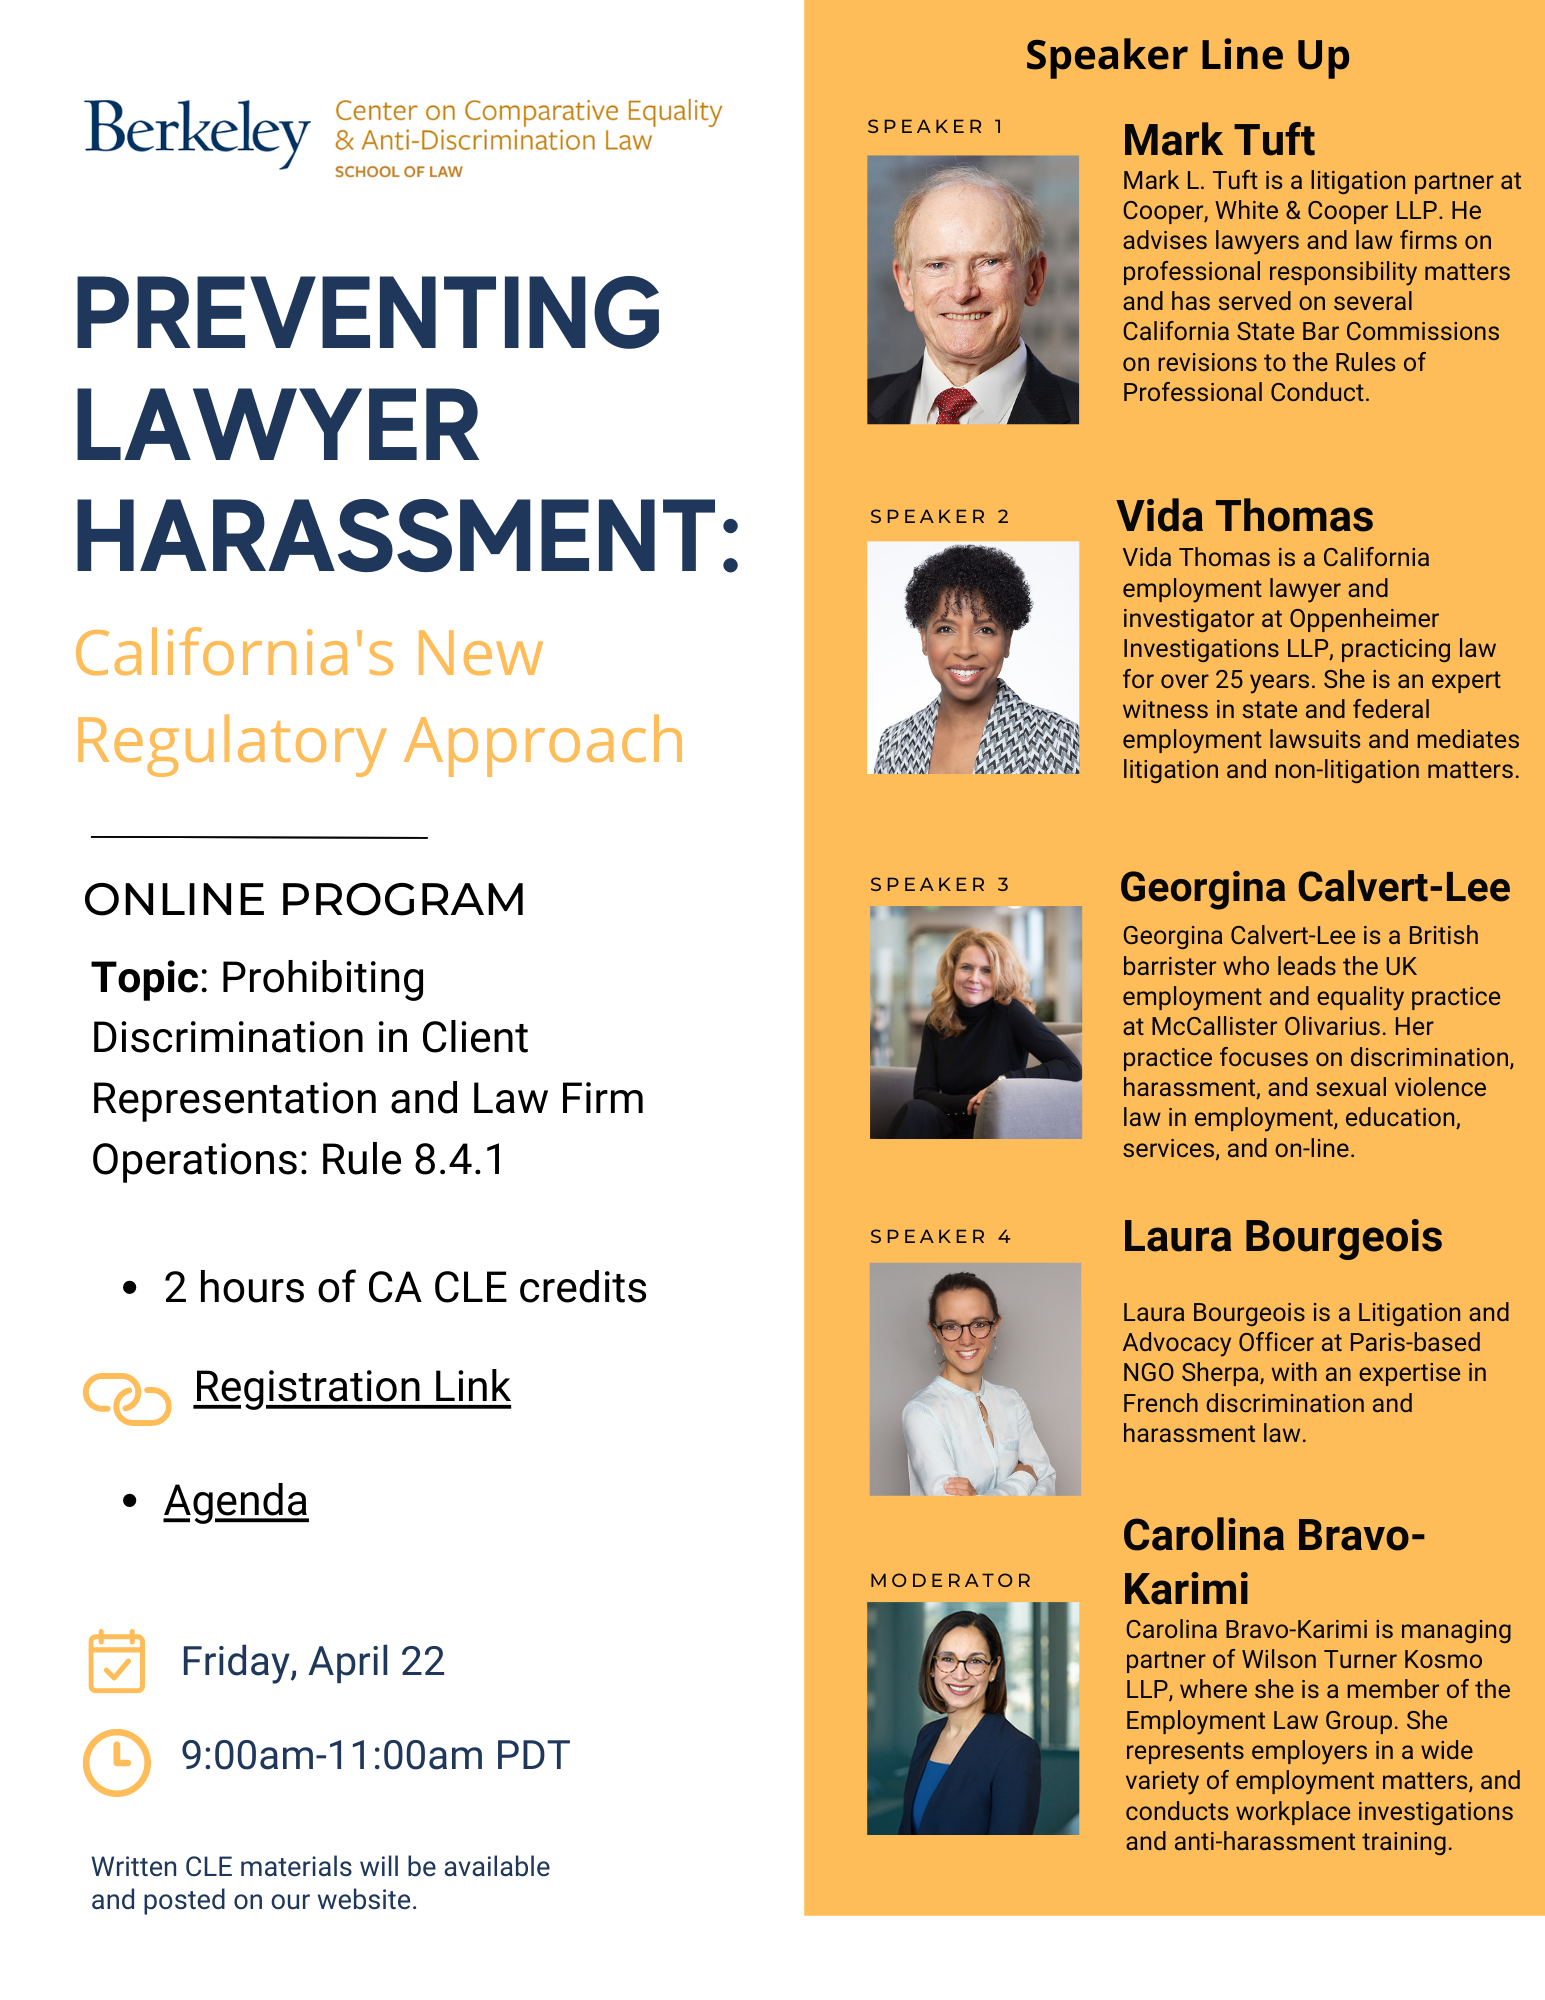 Preventing Lawyer Harassment Online Program Infographic